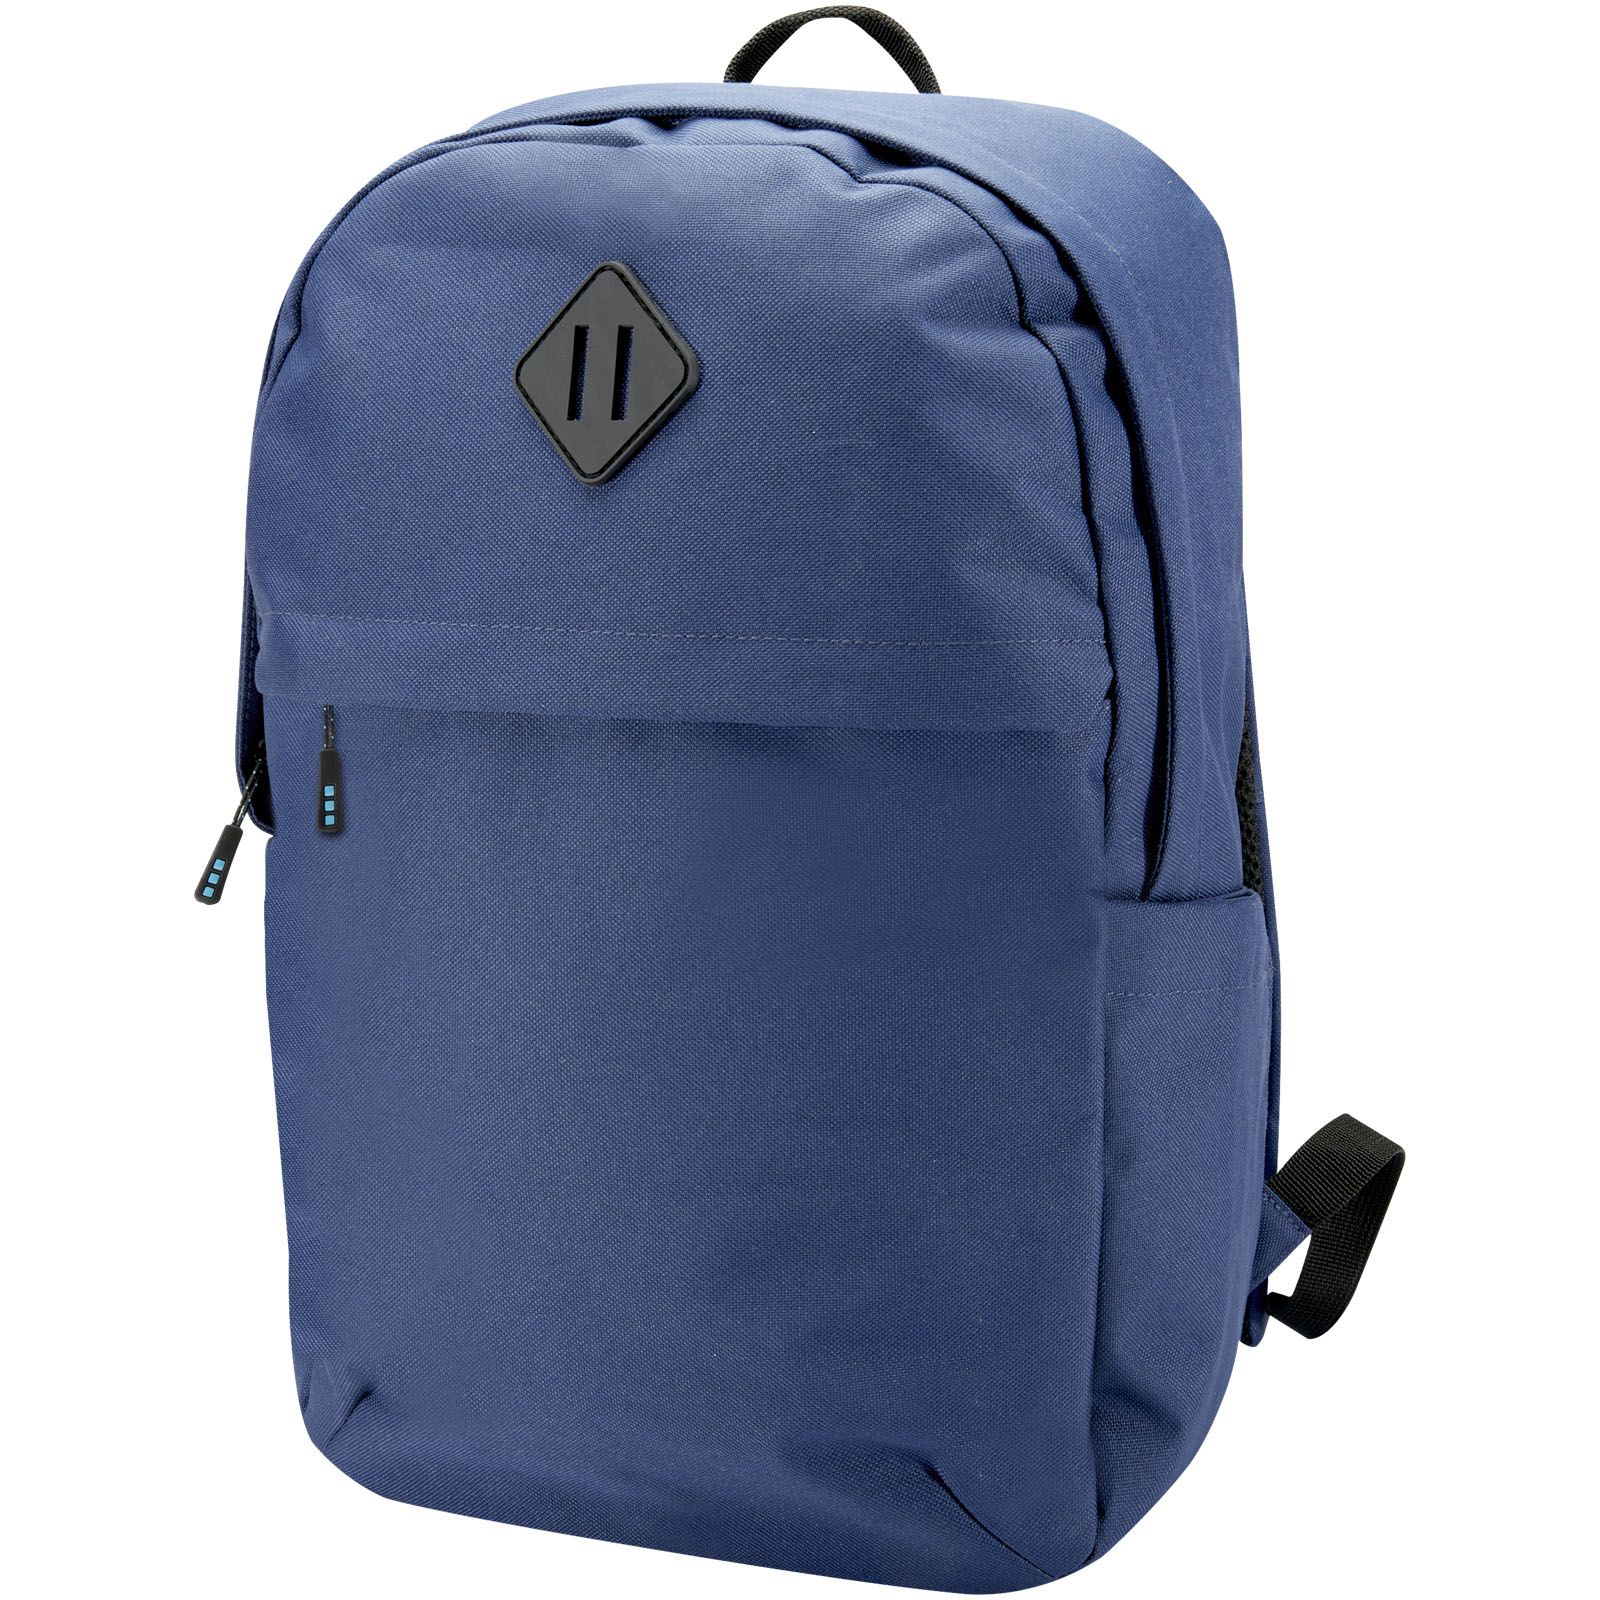 Laptop backpack Repreve® OCEAN made of RPET material - navy